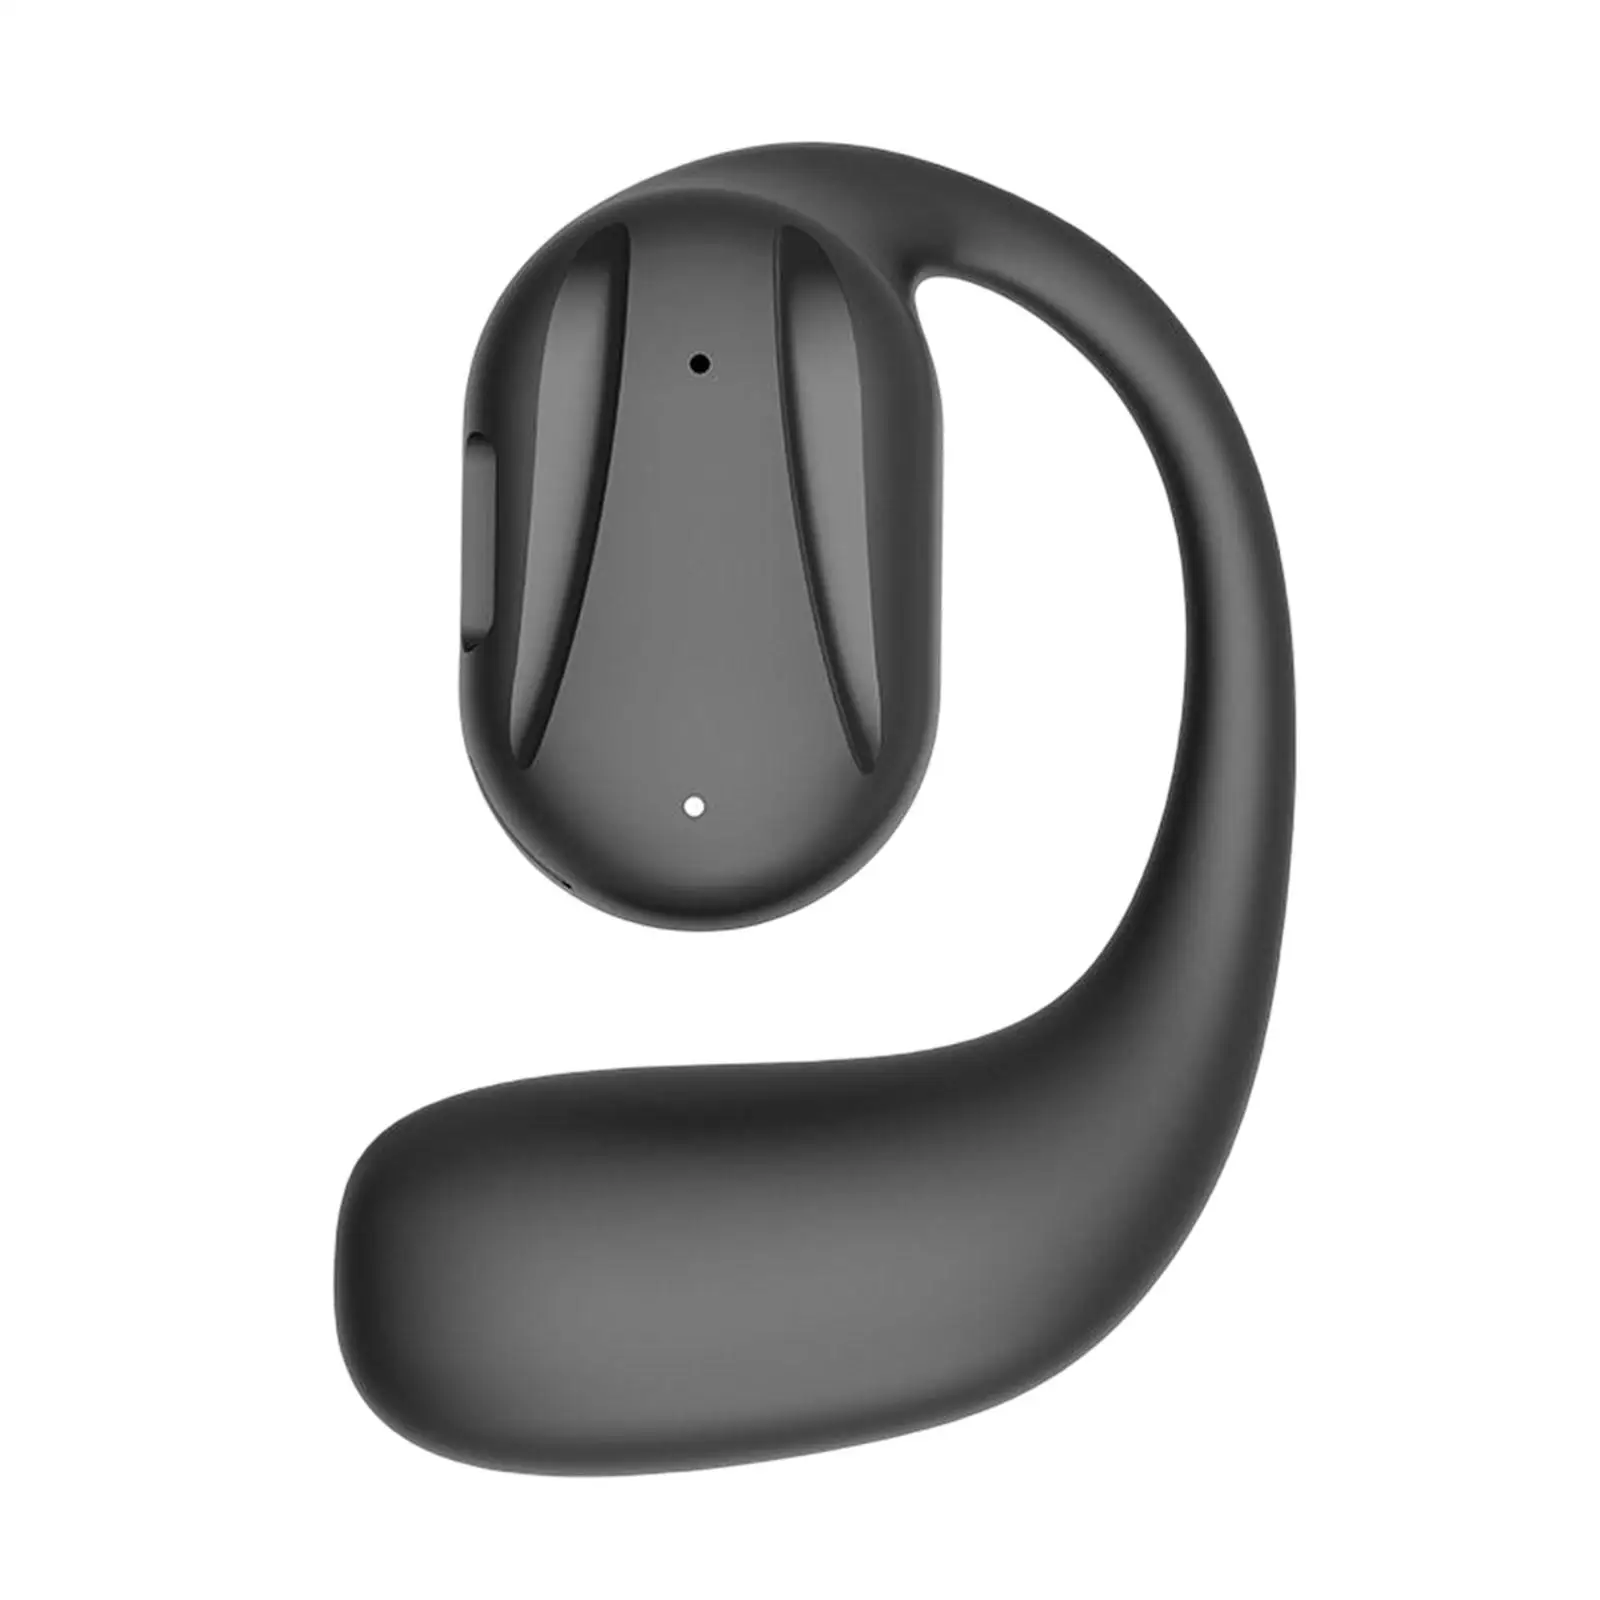 Sports Ear Hook Headset Earpiece Portable Handsfree with Mic Left Ear 5.2 Earphone for Mountaineering Workout Office Cycling